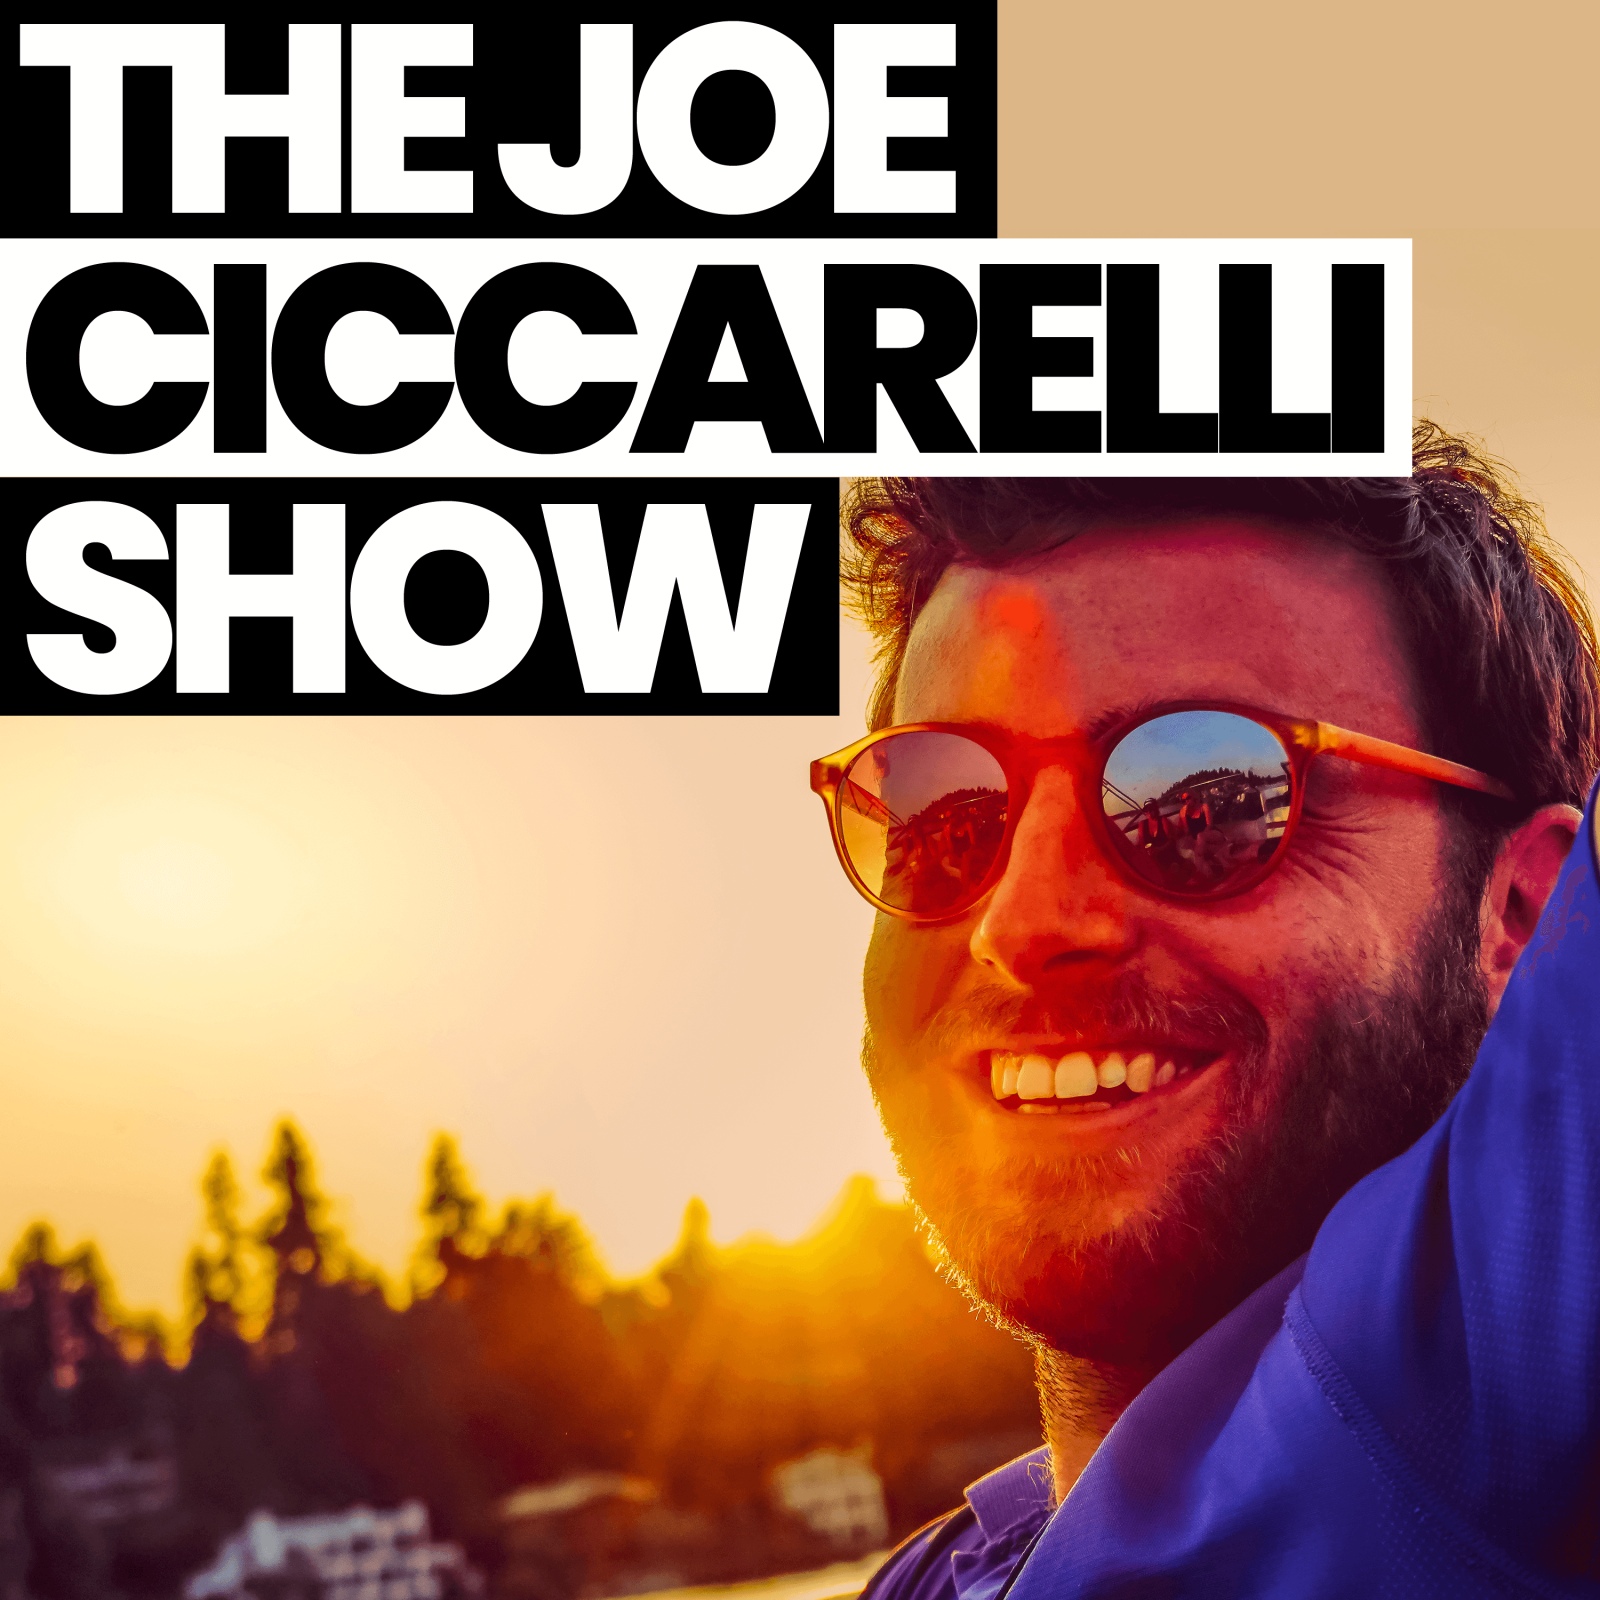 The Joe Ciccarelli Show